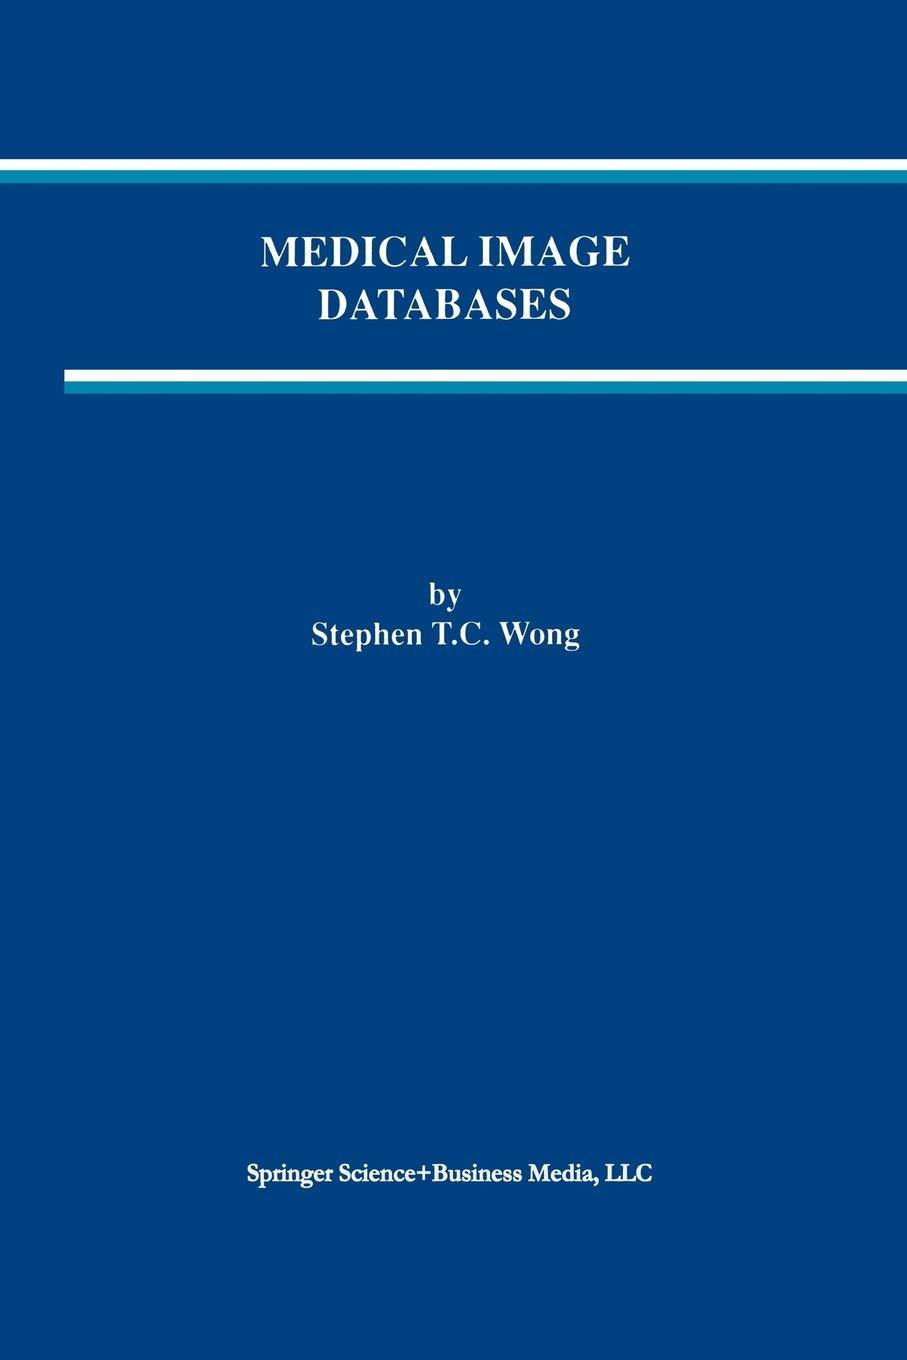 medical image databases 1998 edition stephen t.c. wong 1461375398, 978-1461375395